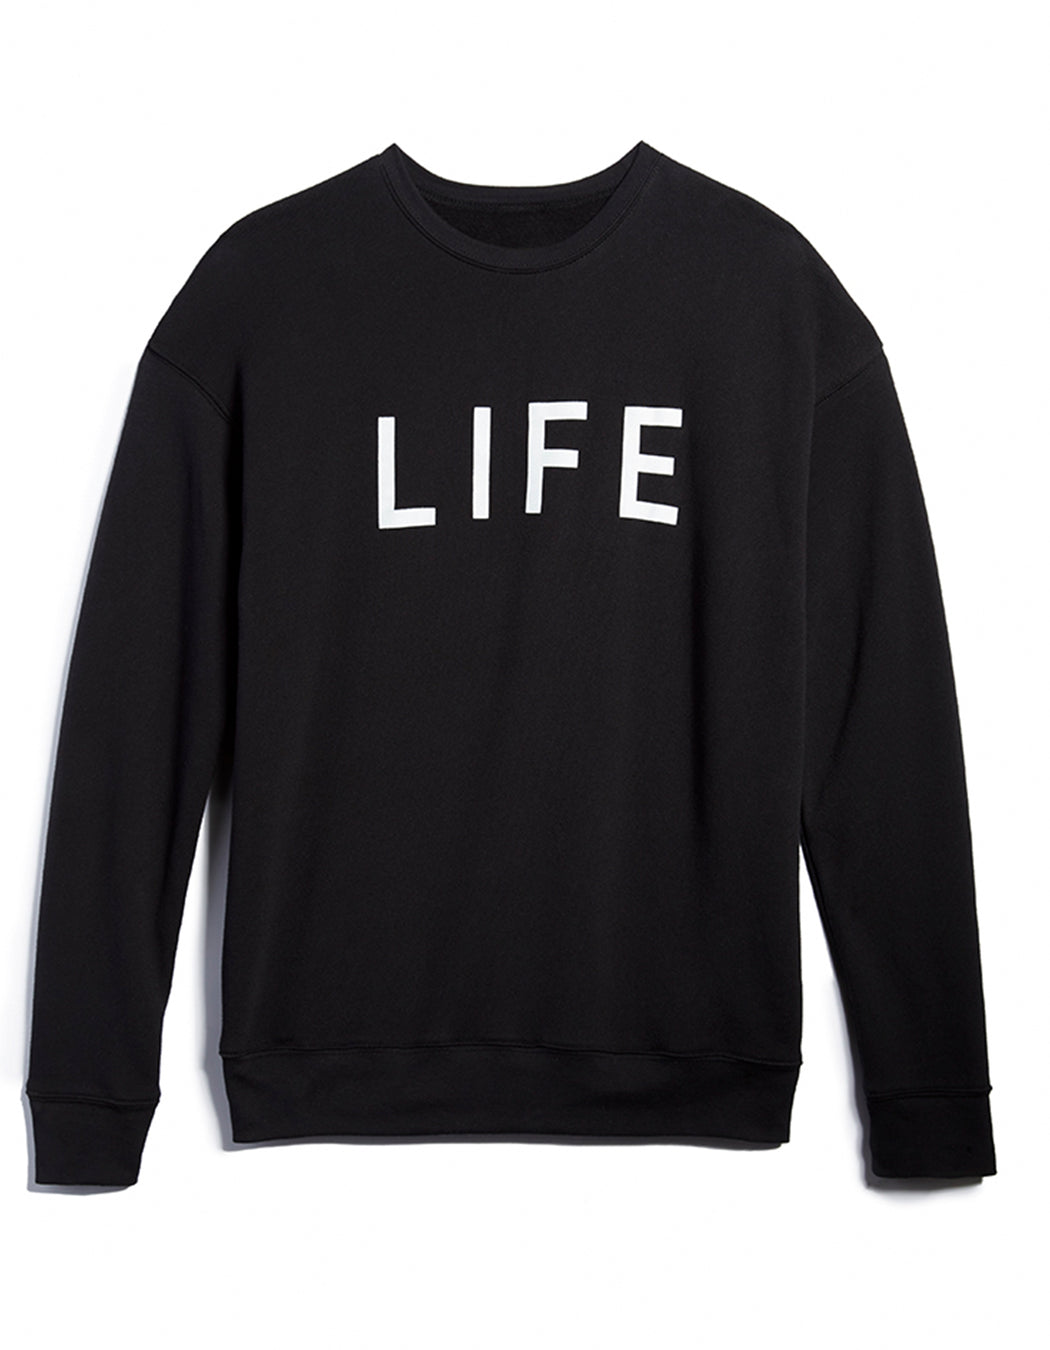 LIFE / BLACK Sweatshirt ONW-LIFE-206-BLK